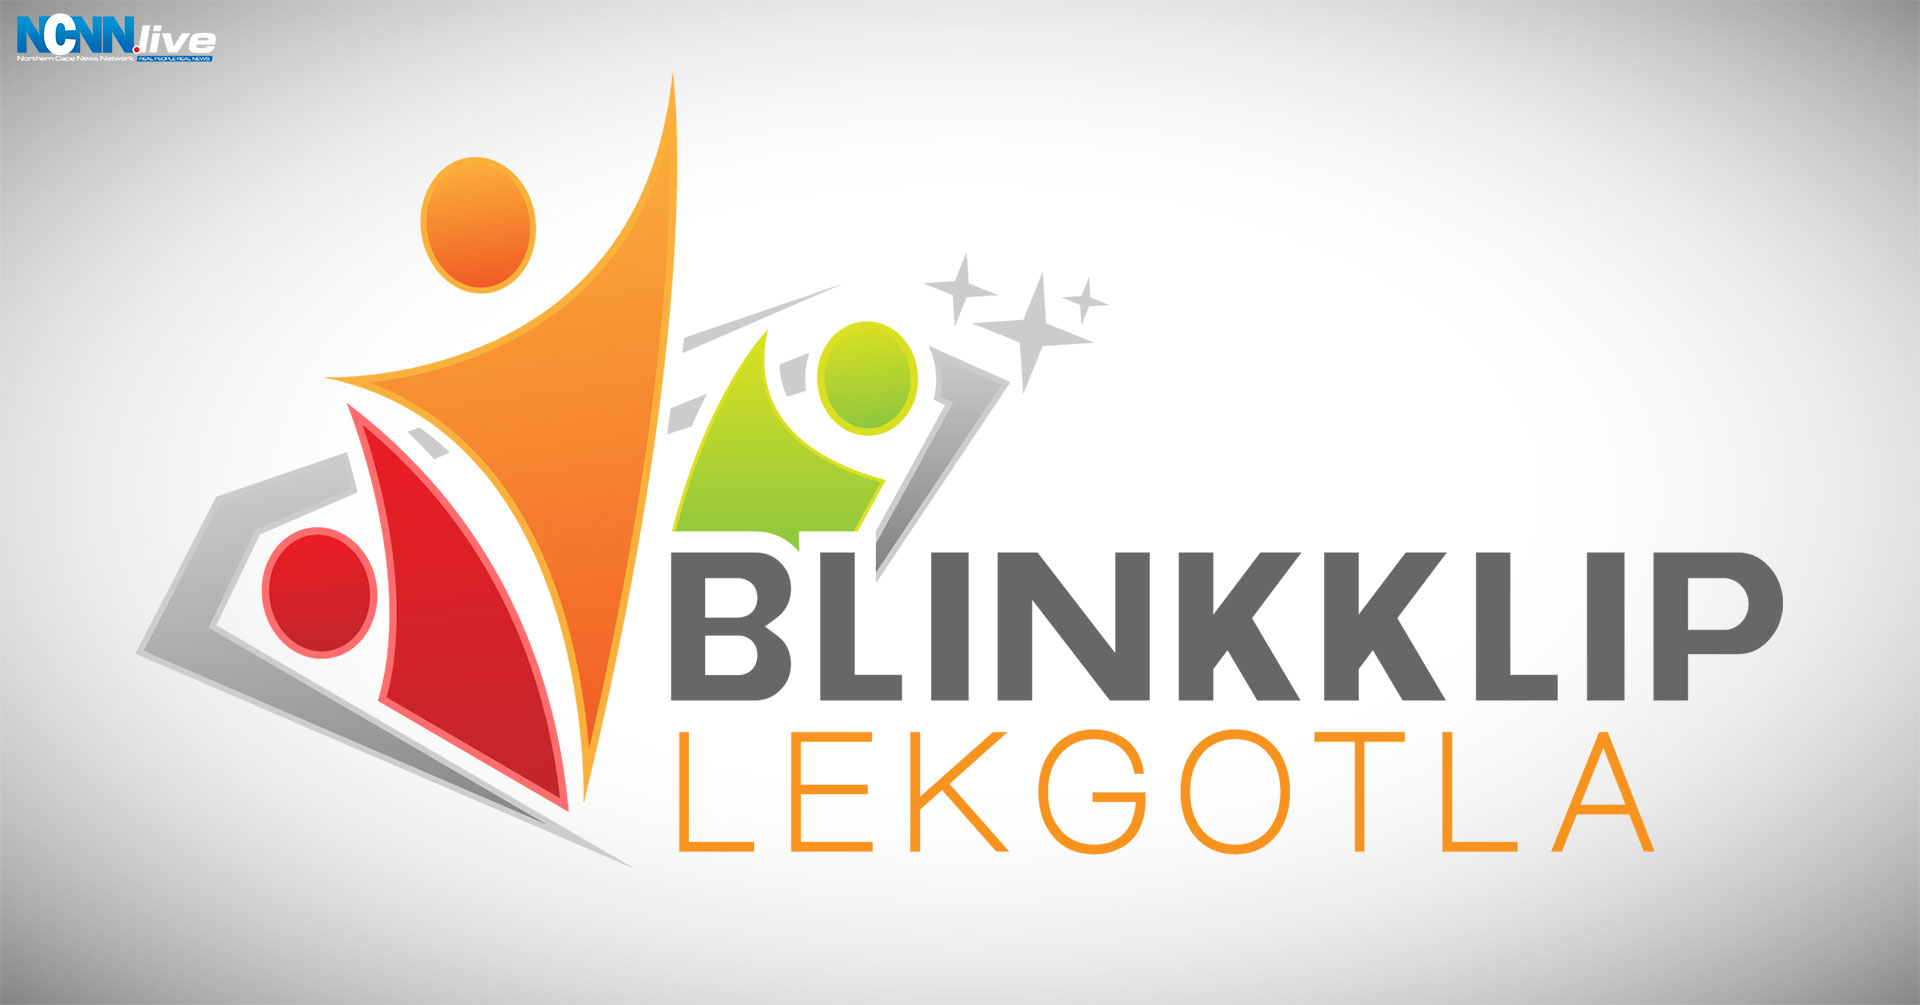 News_Article-Blinkklip_Lekgotla-20181018-FI